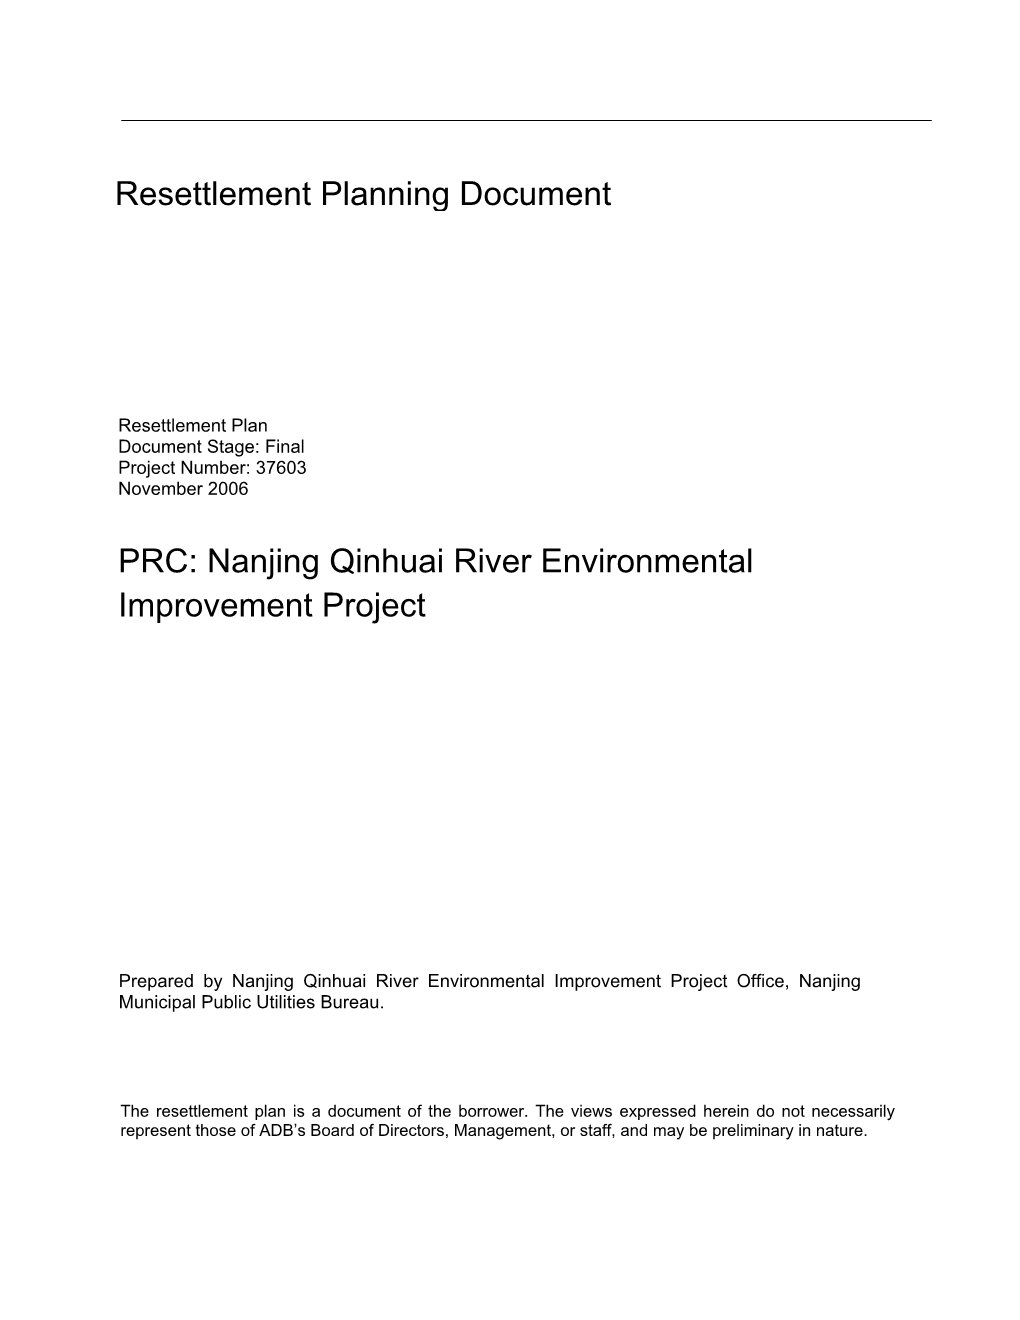 Nanjing Qinhuai River Environmental Improvement Project